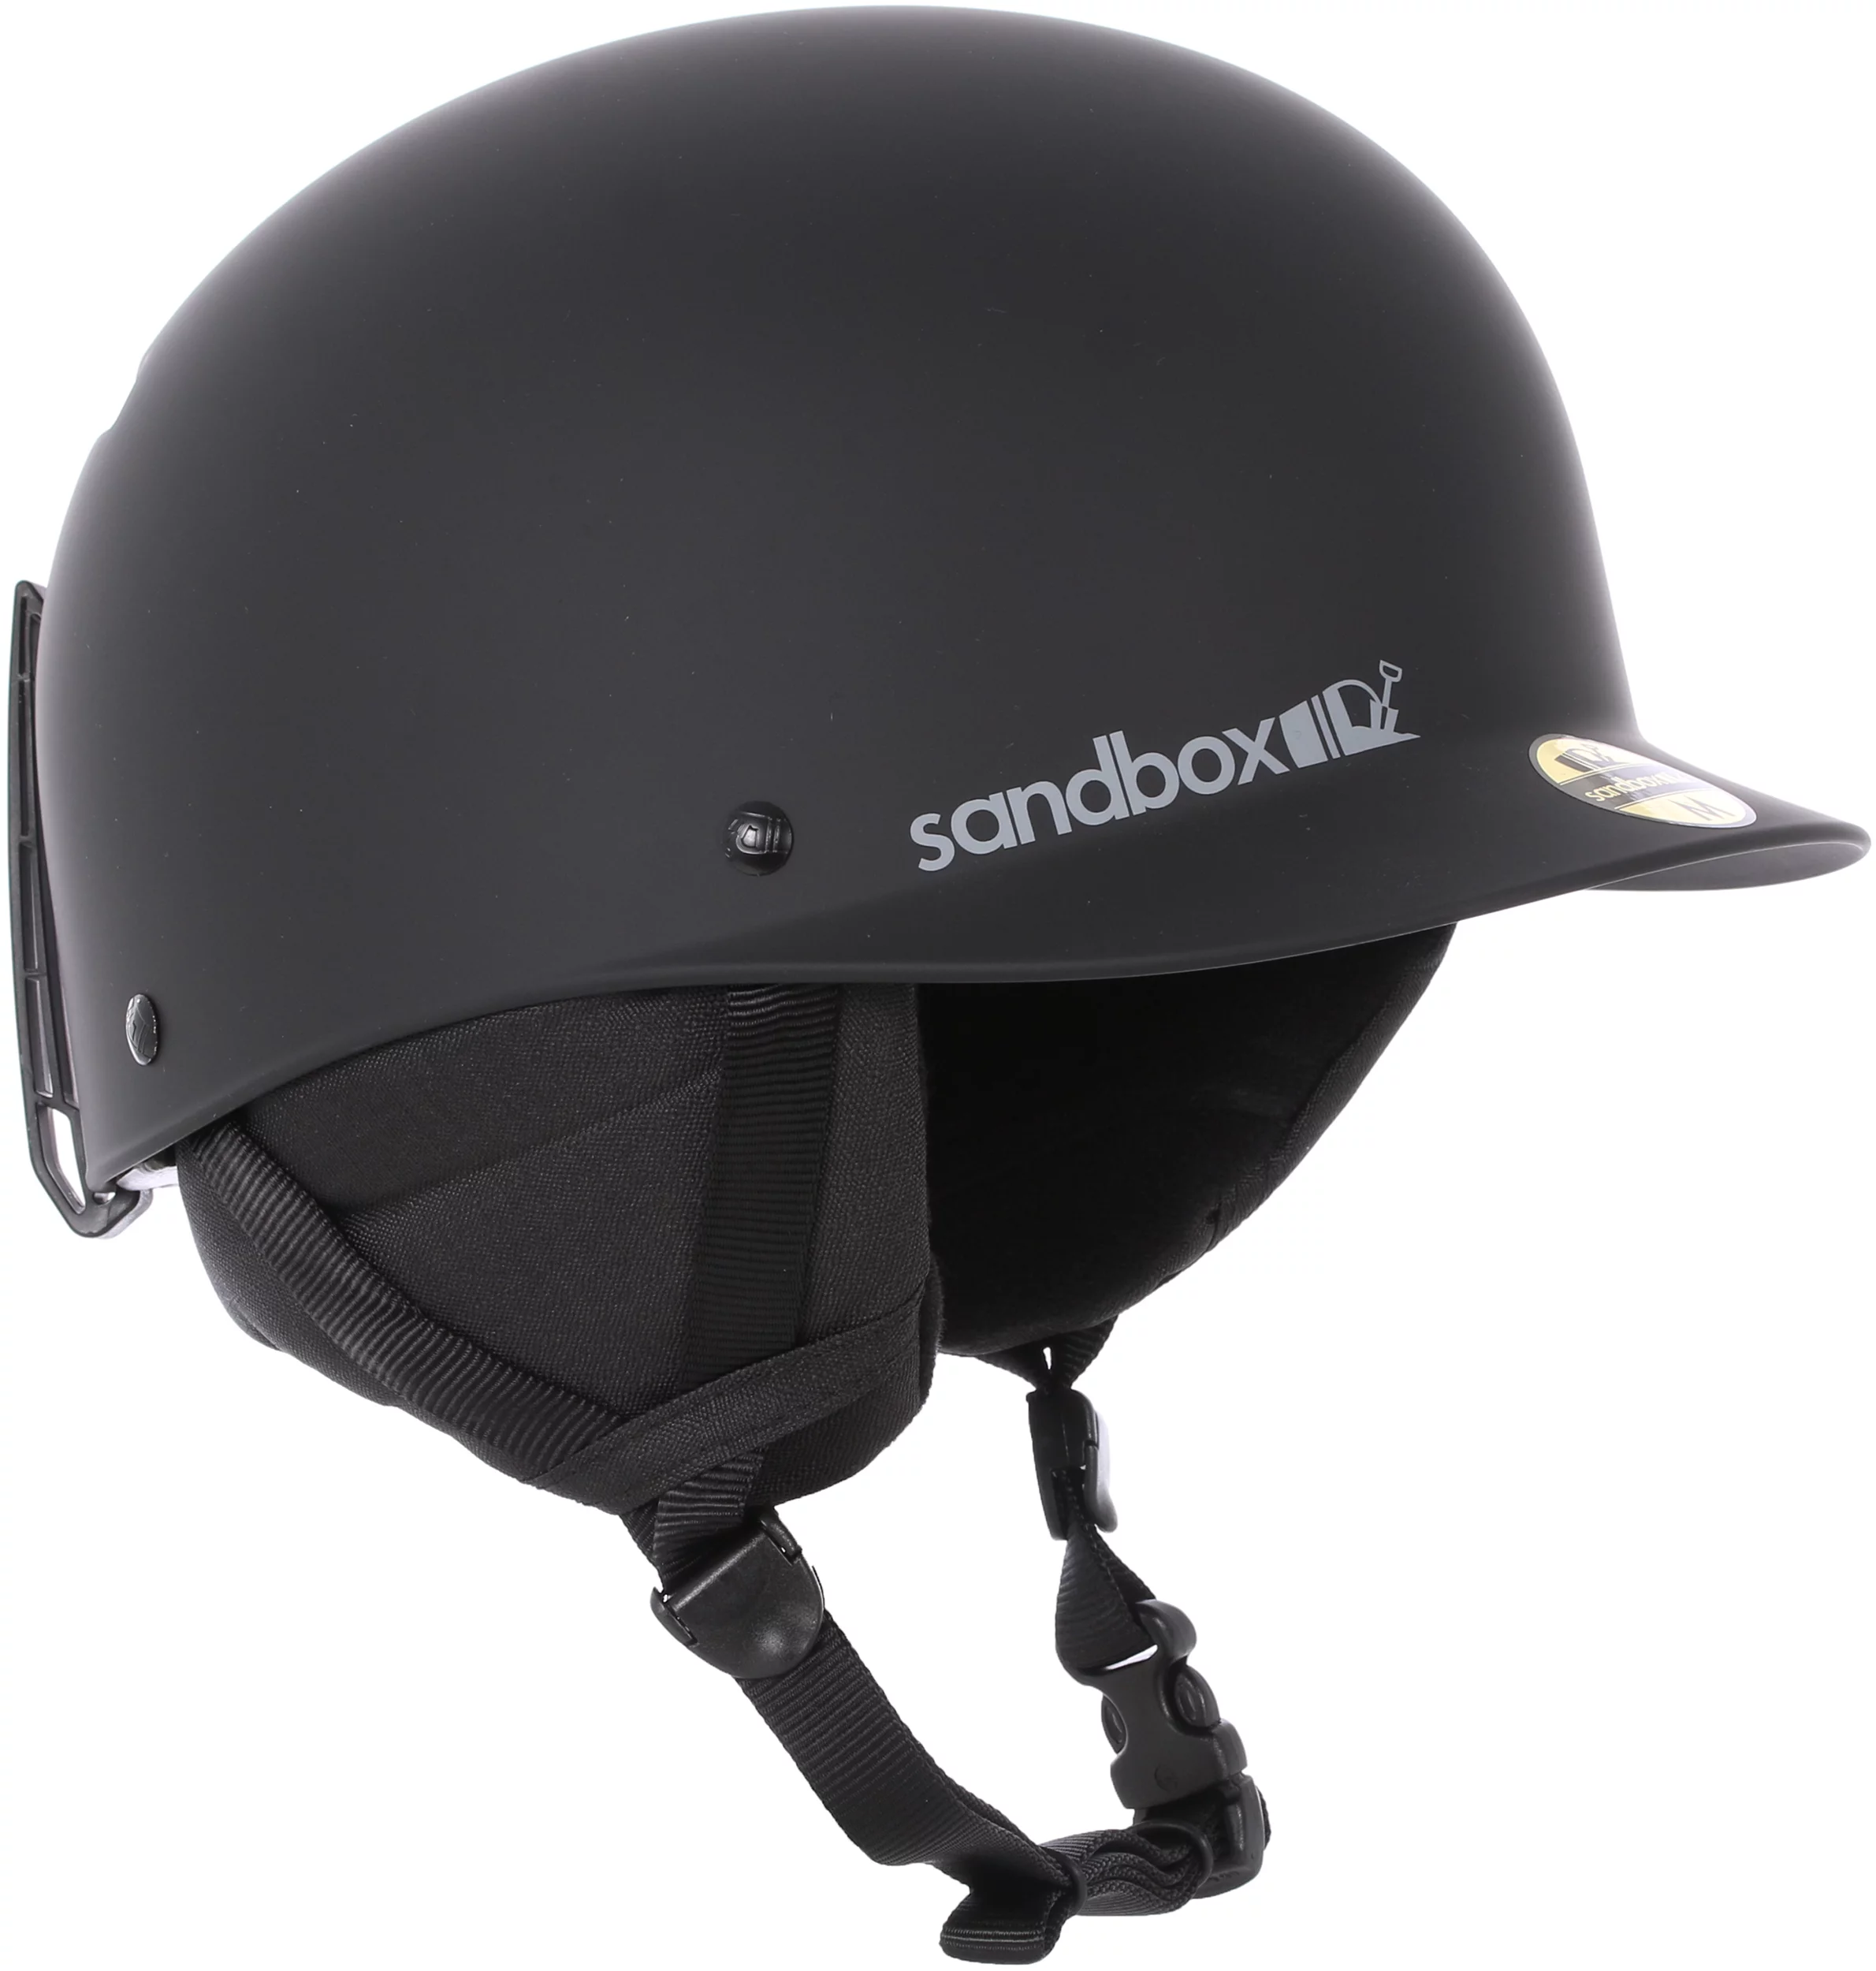 BRAND NEW Sandbox Legend Helmet MATTE BLACK Snowboard Ski MEDIUM LARGE LIMITED 